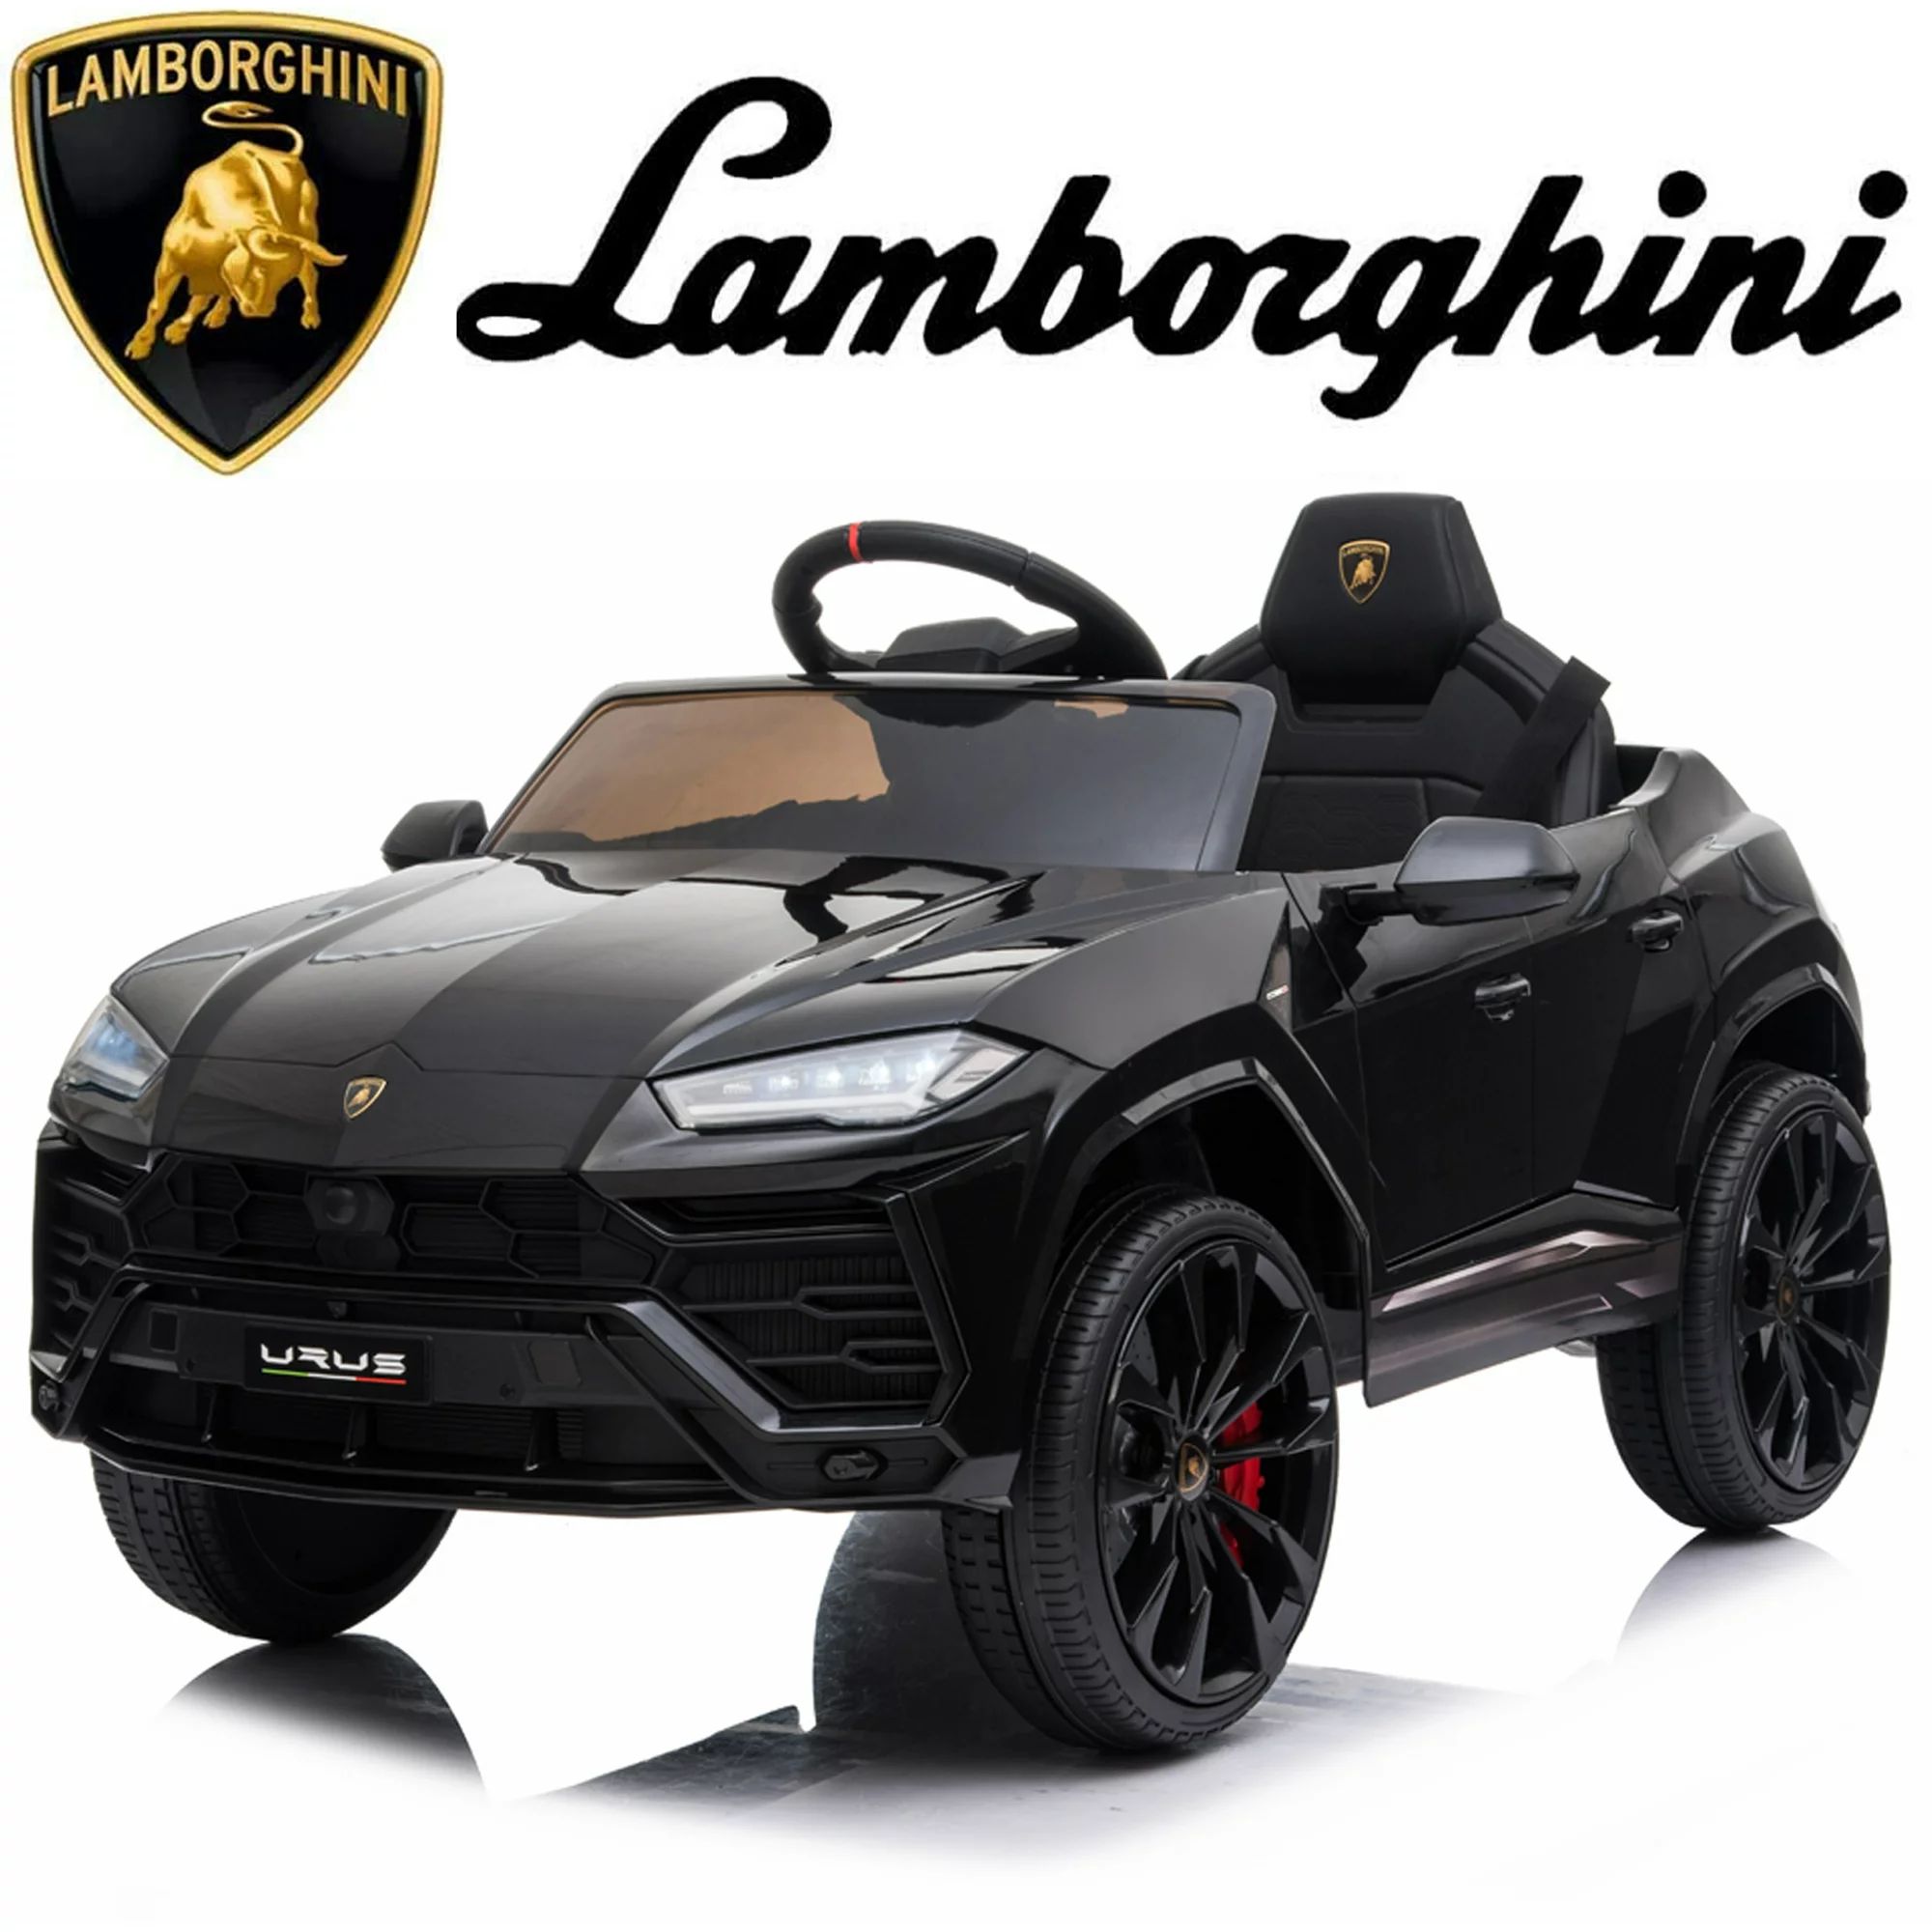 Lamborghini 12 V Powered Ride on Cars, Remote Control, Battery Powered, Black | Walmart (US)